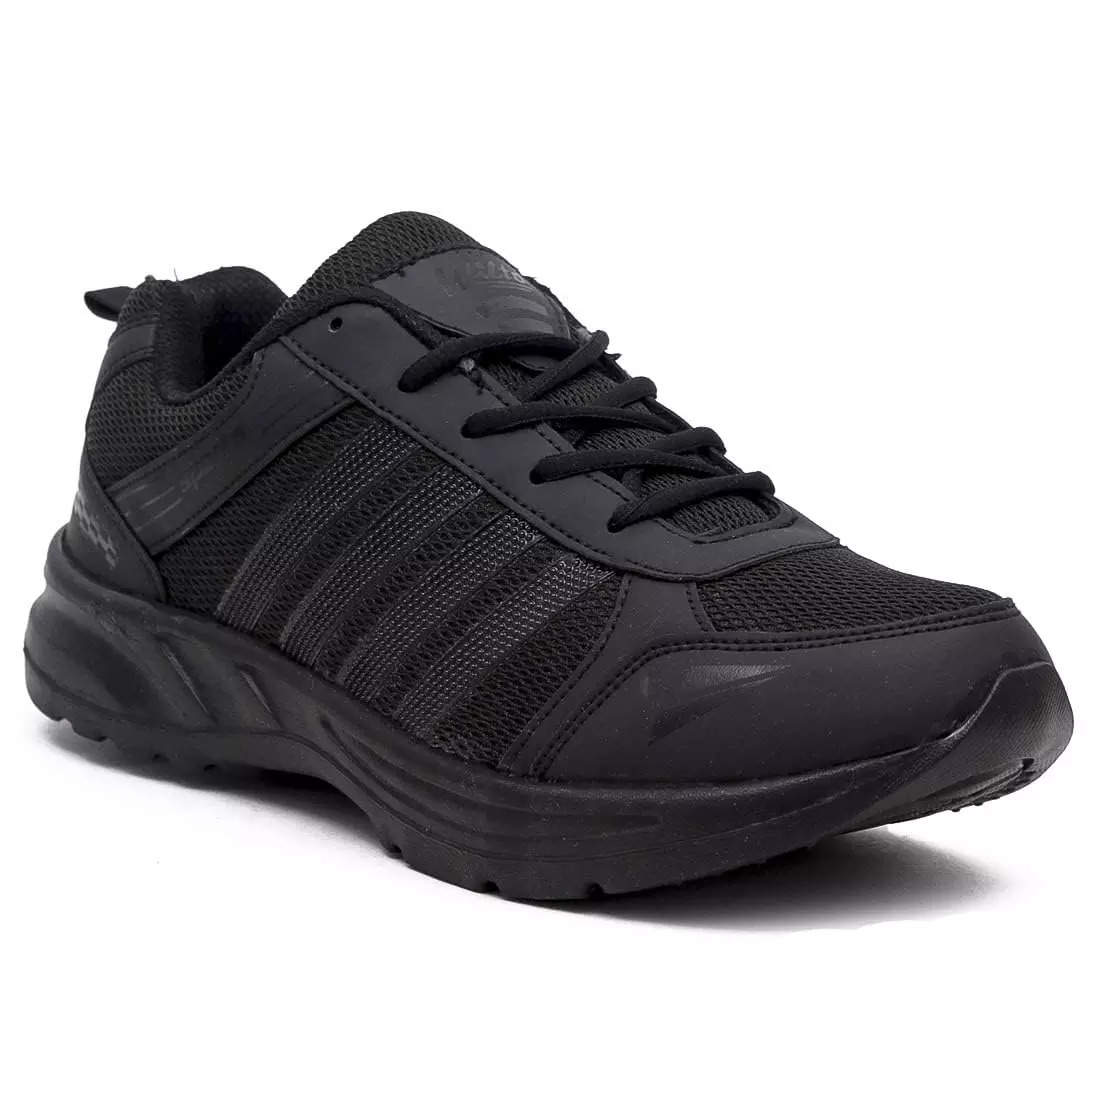 Black Sports Shoes for Men: 8 Best Black Sports Shoes for Men; For All ...